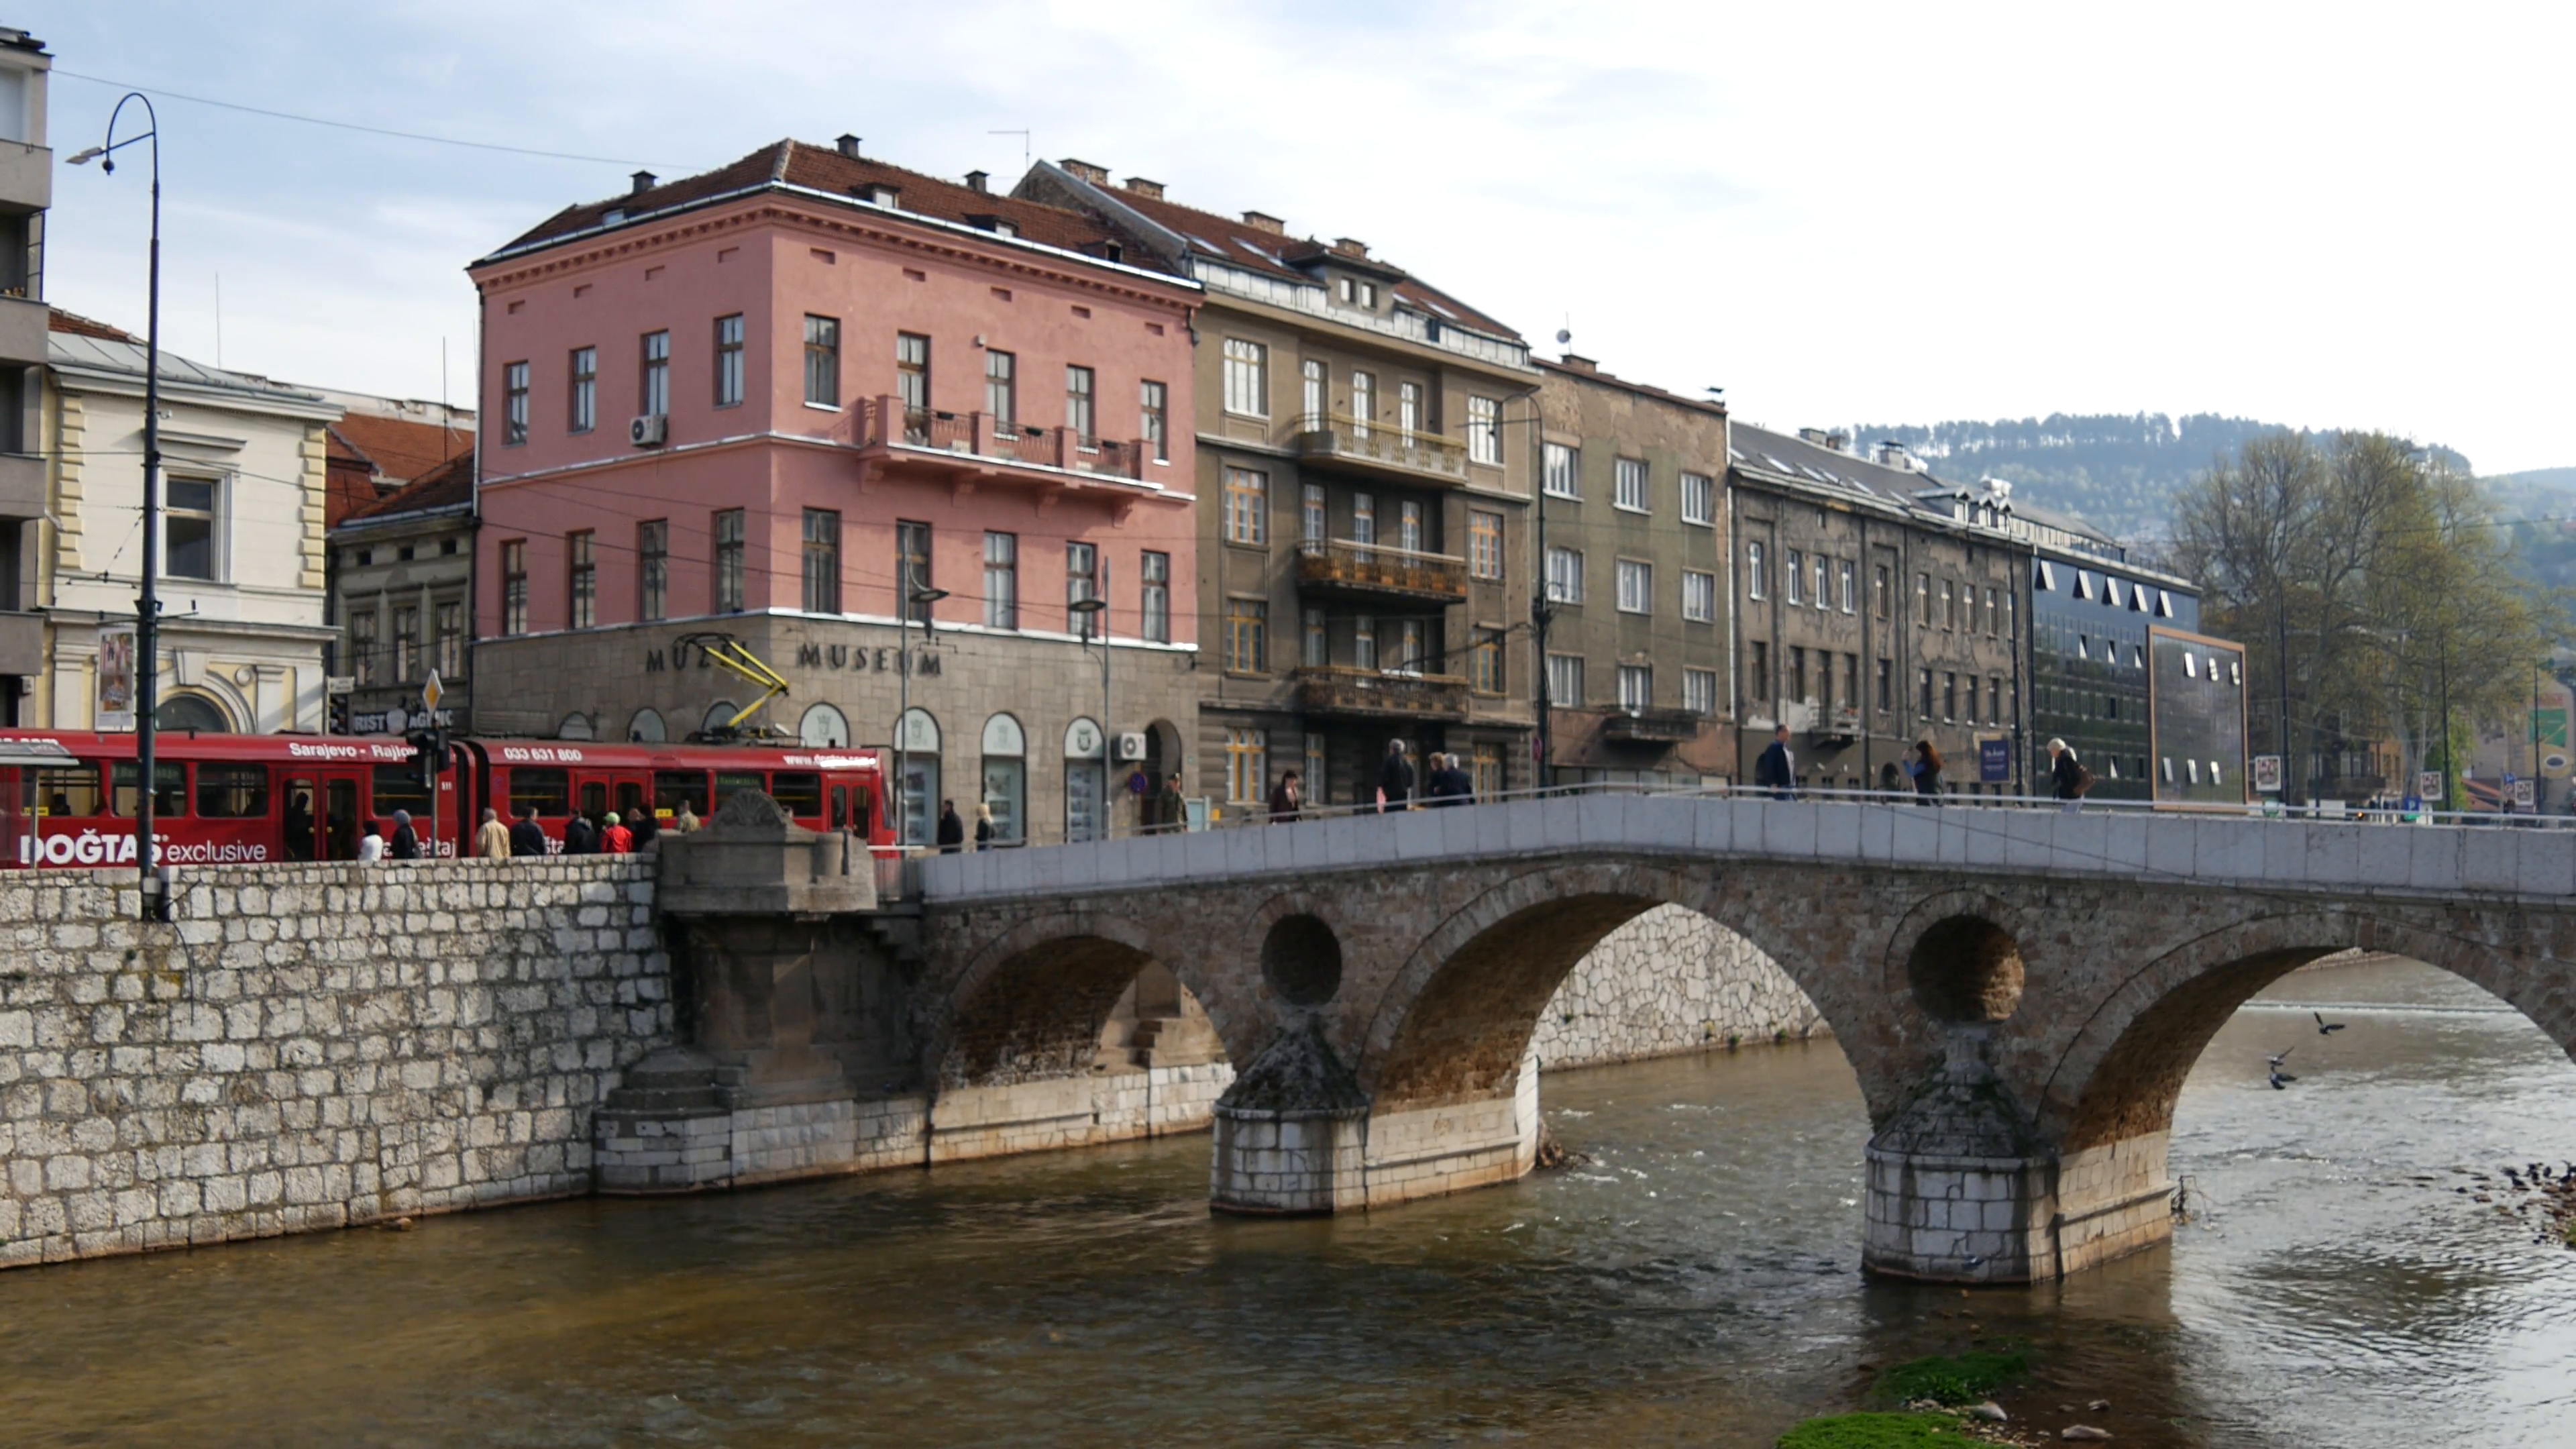 Latin Bridge a historic Ottoman bridge over the River Miljacka in ...